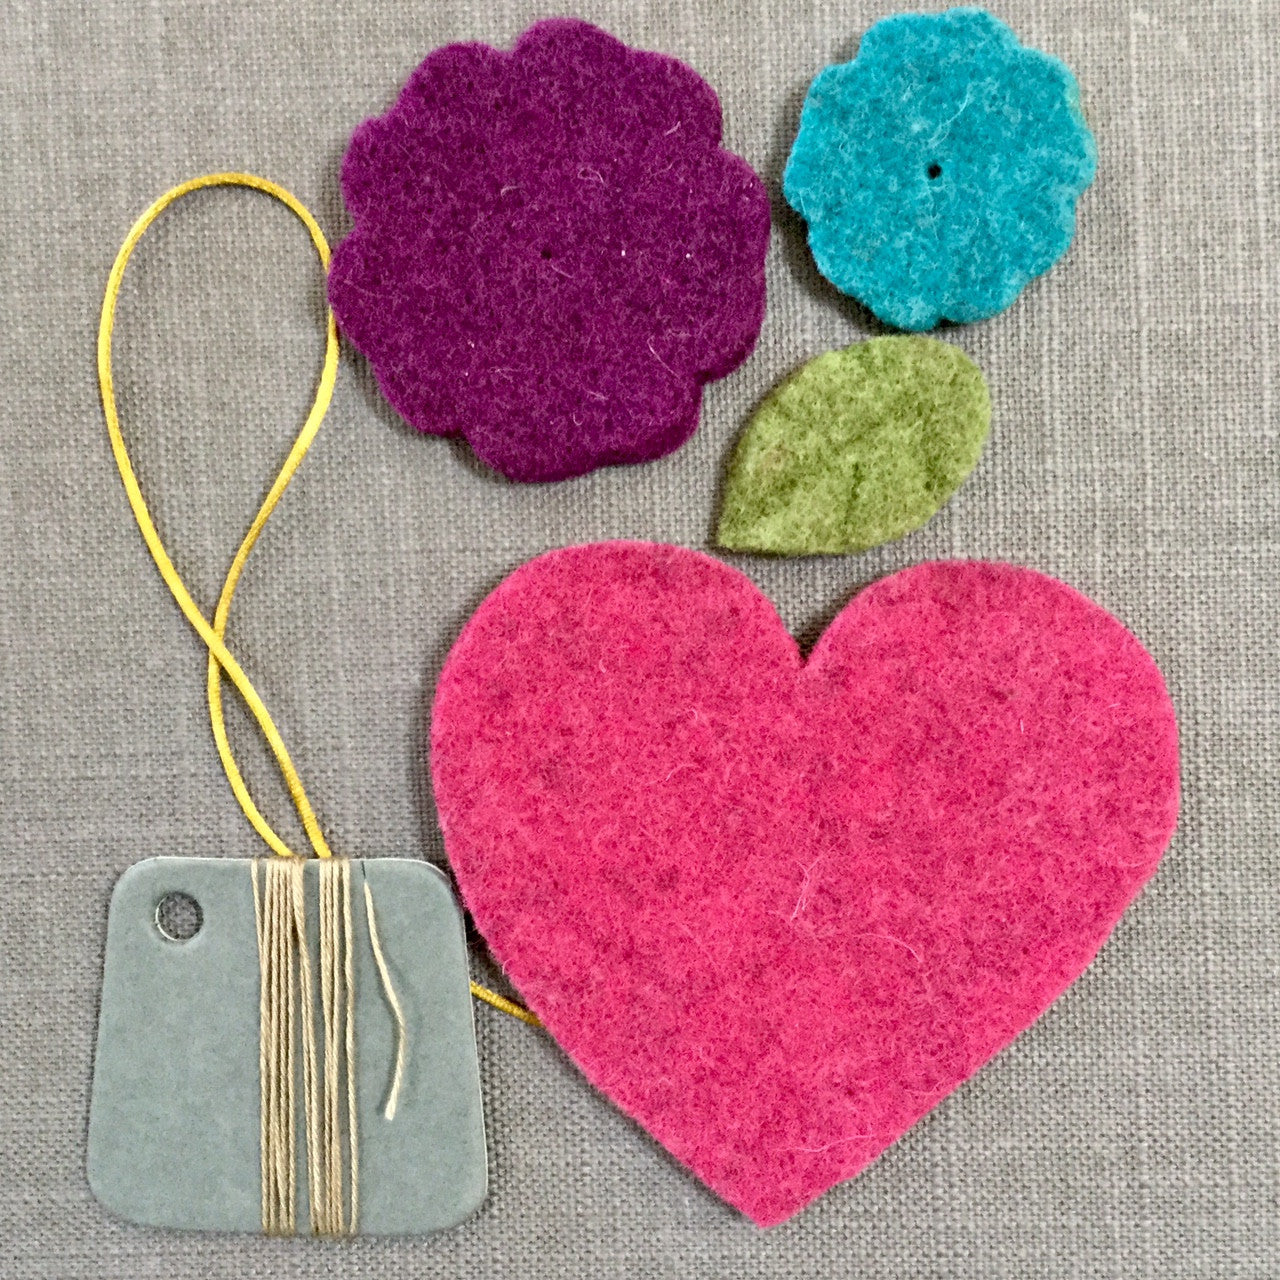 12+ felt heart ornaments to make - Swoodson Says